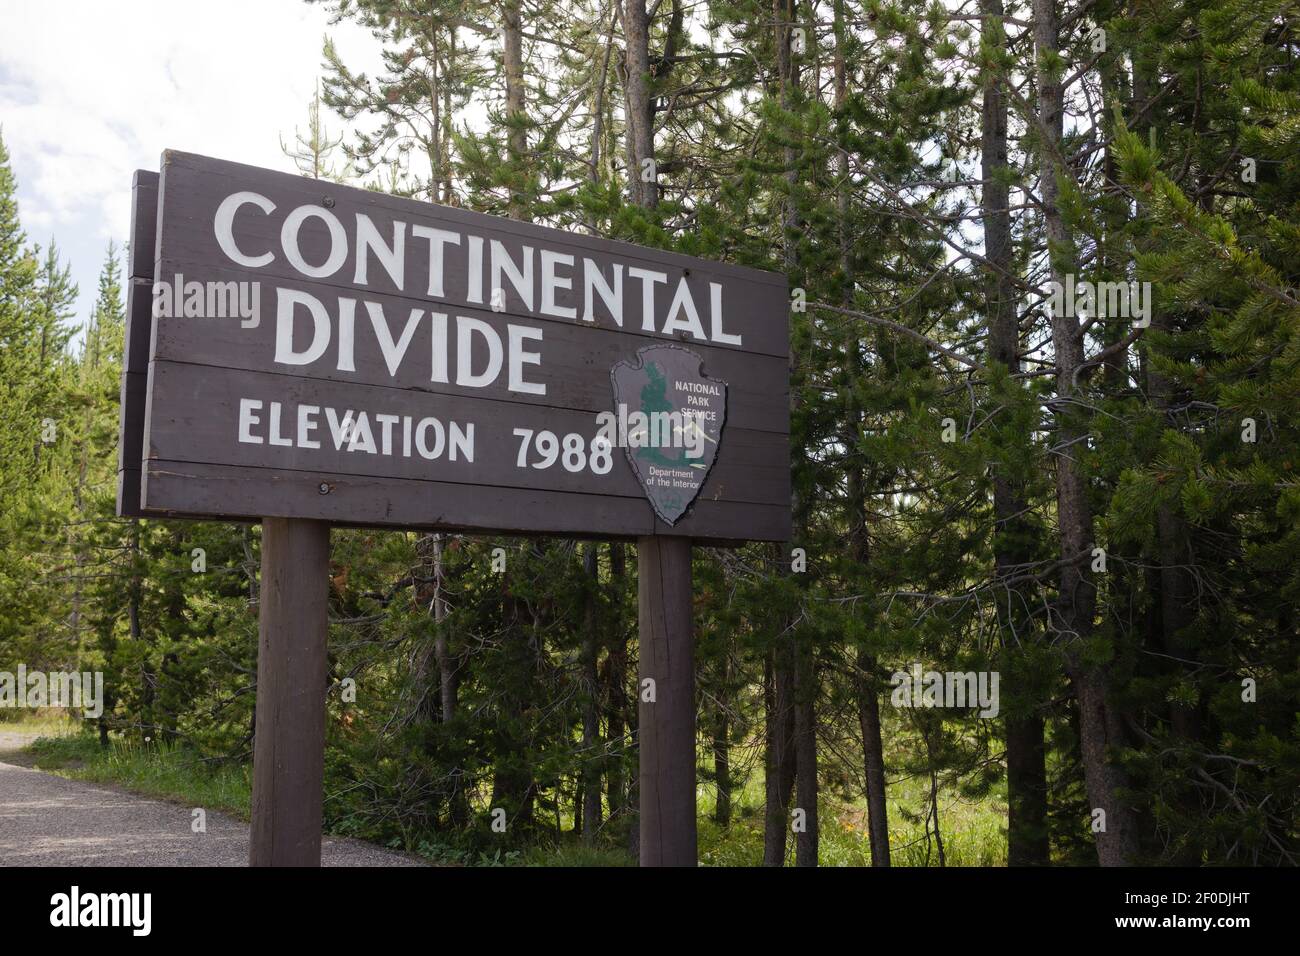 Marcatore di divisione continentale NPS Wyoming Elevation 7988 Foto Stock